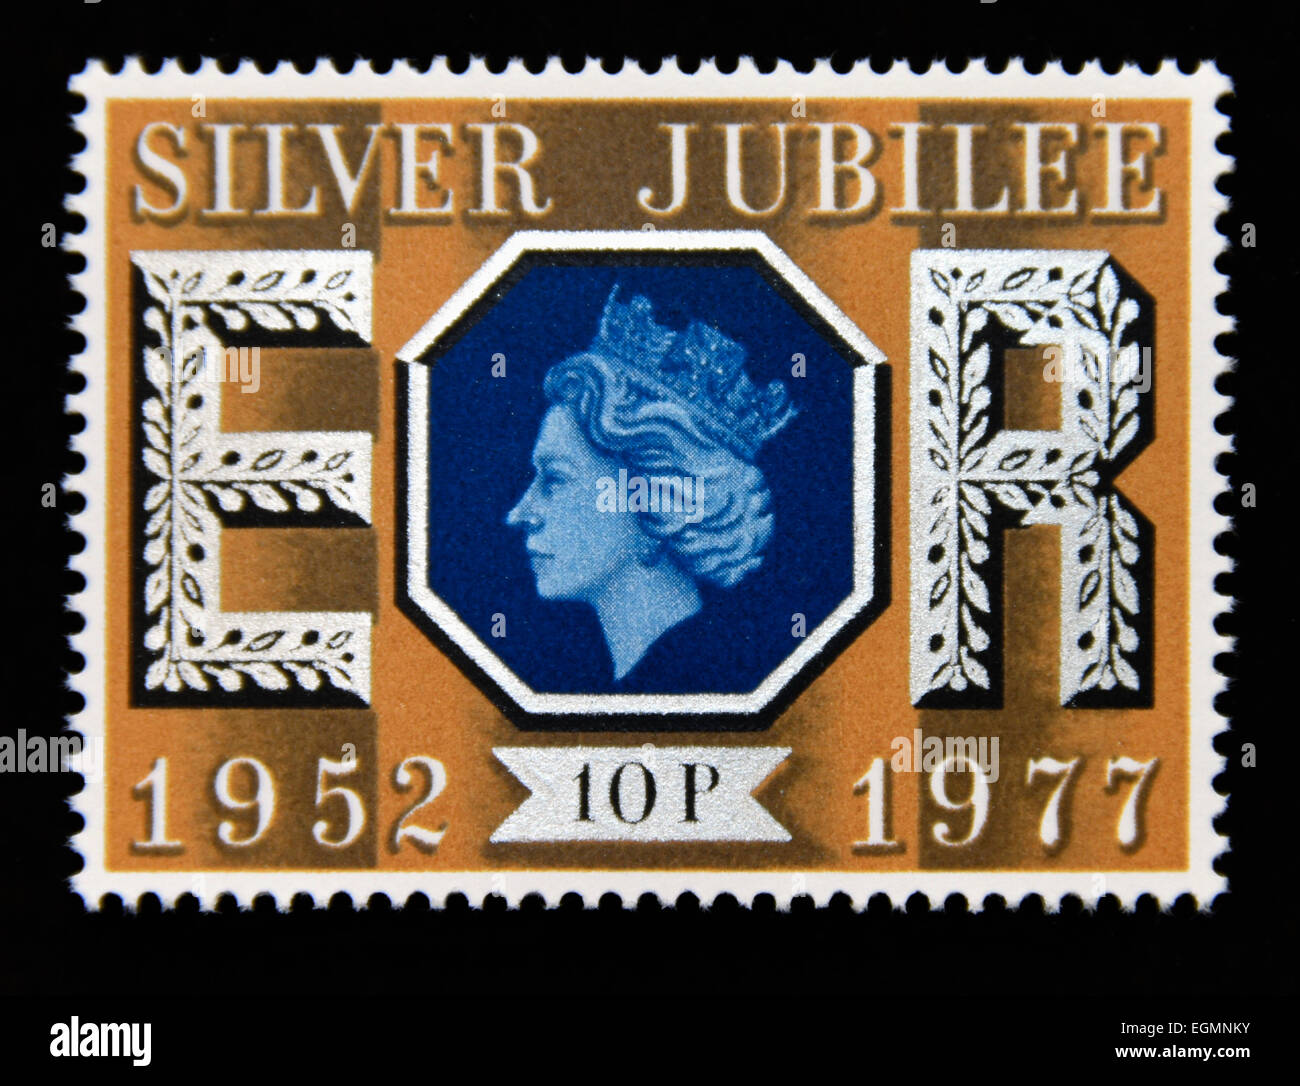 Postage stamp. Great Britain. Queen Elizabeth II. 1977. Silver Jubillee 1952-1977. 10p. Stock Photo